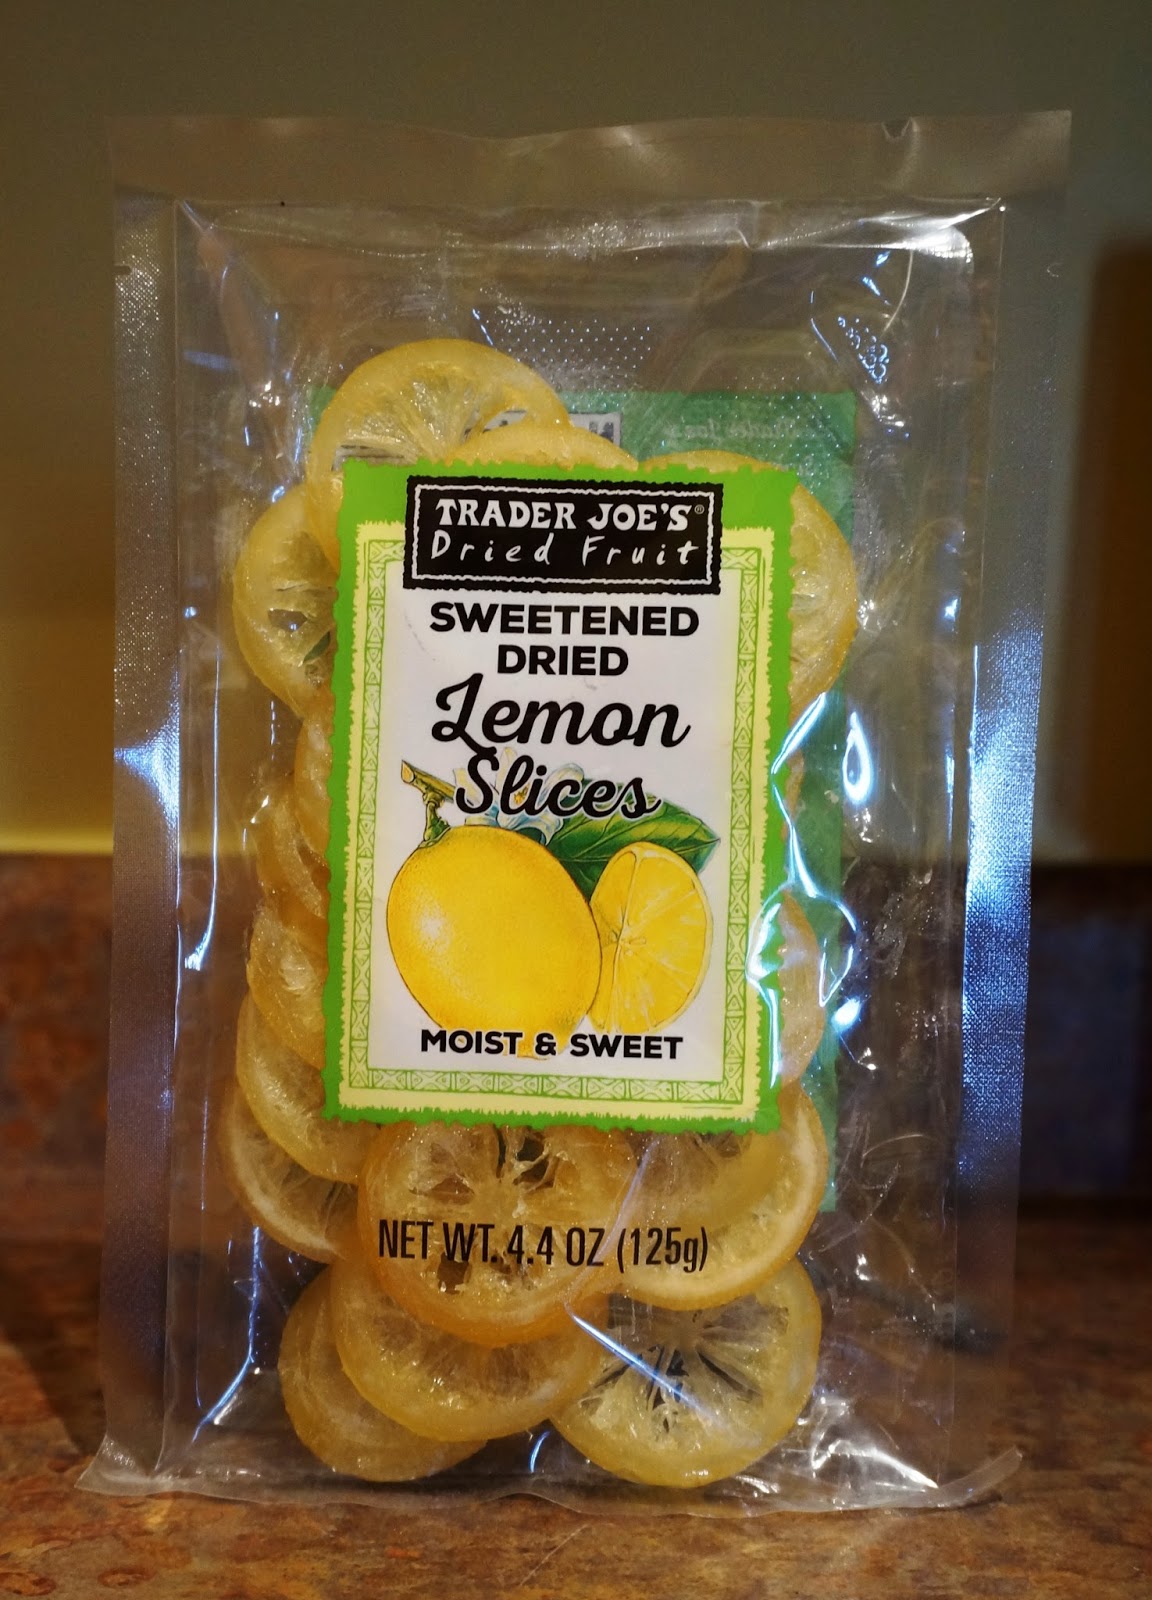 Exploring Trader Joe's: Trader Joe's Sweetened Dried Lemon Slices